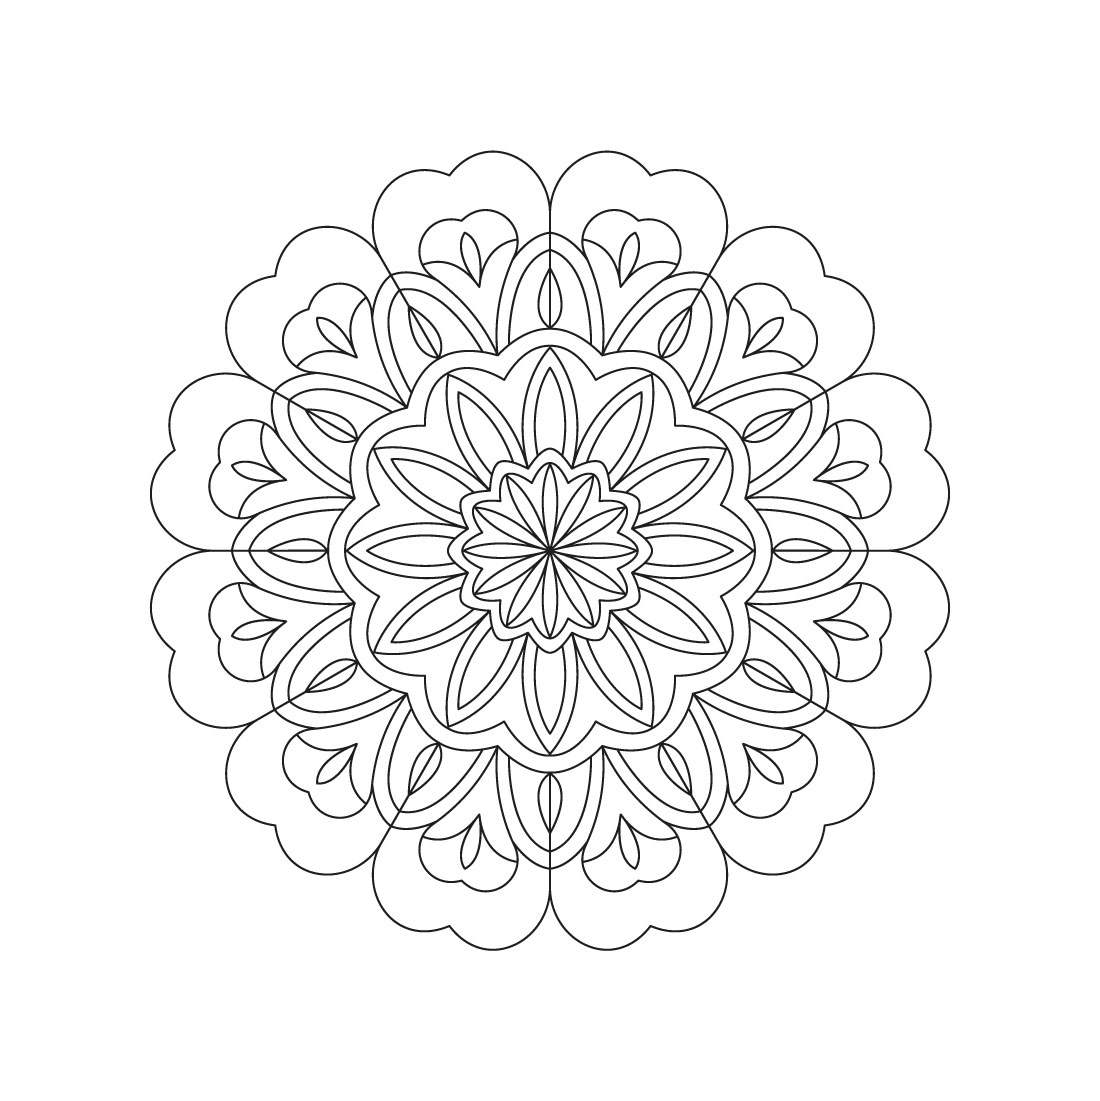 bundle of 10 peaceful patterns mandala coloring book pages 09 771